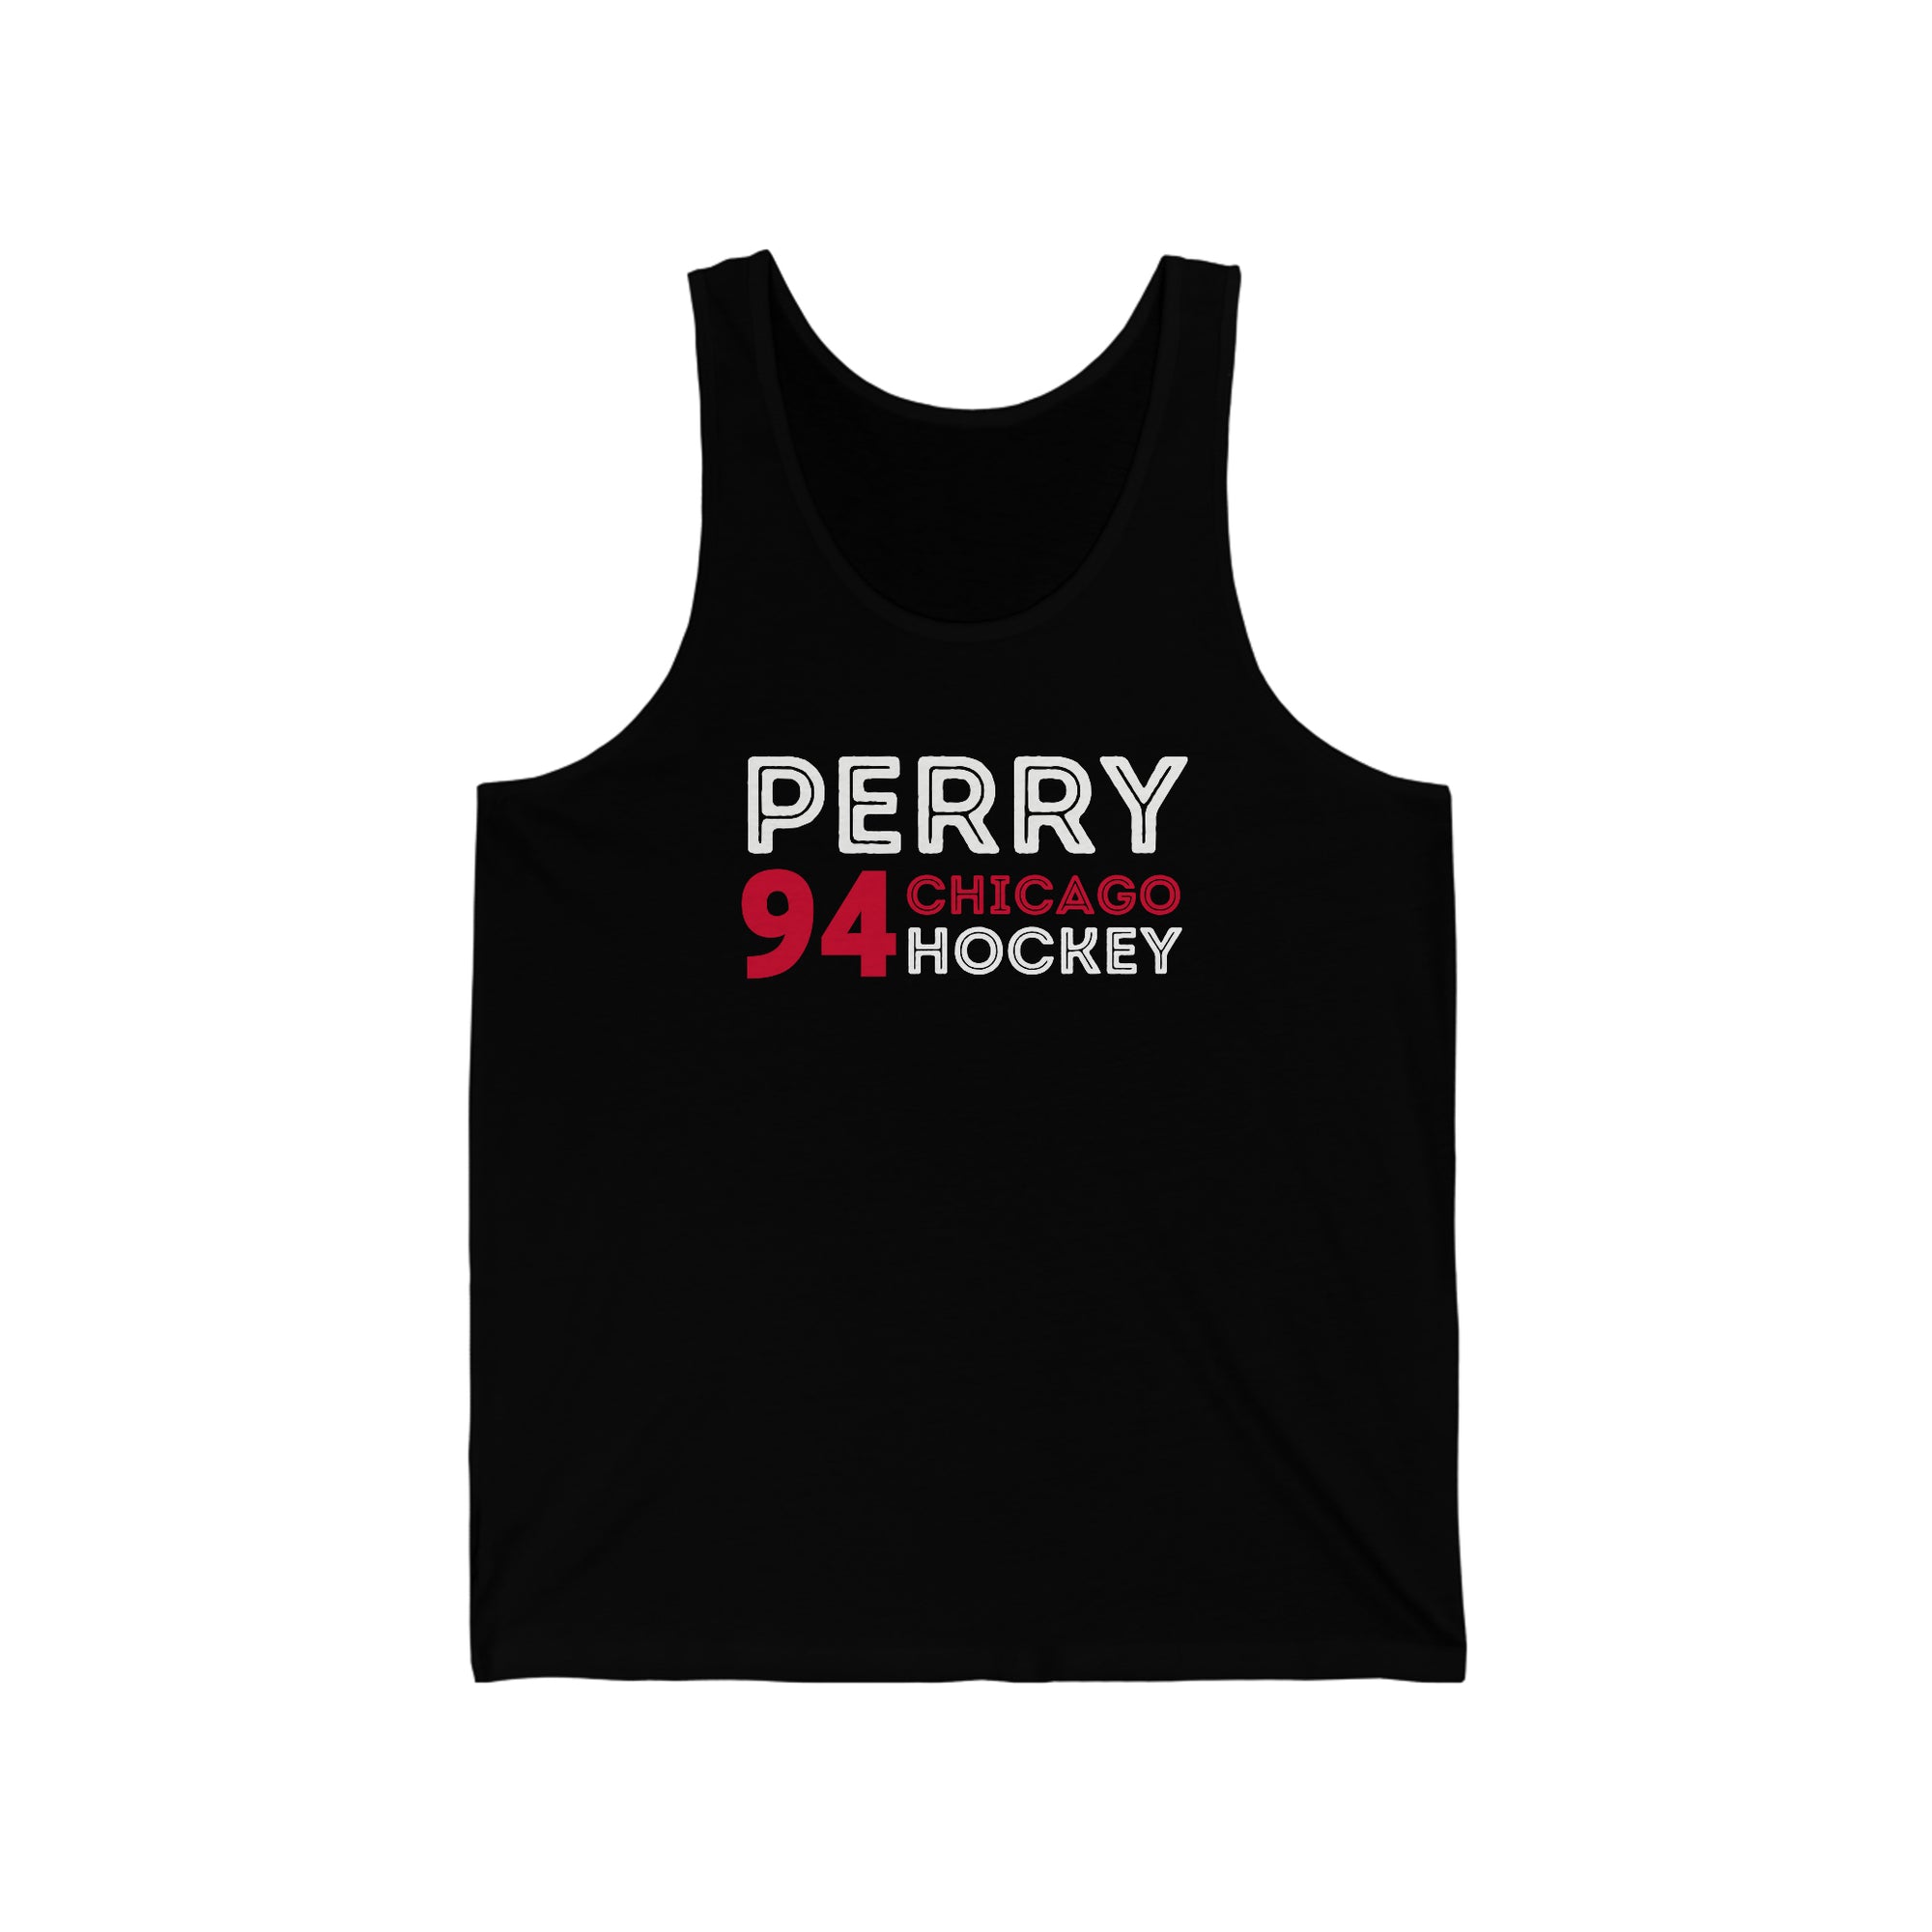 Perry 94 Chicago Hockey Grafitti Wall Design Unisex Jersey Tank Top